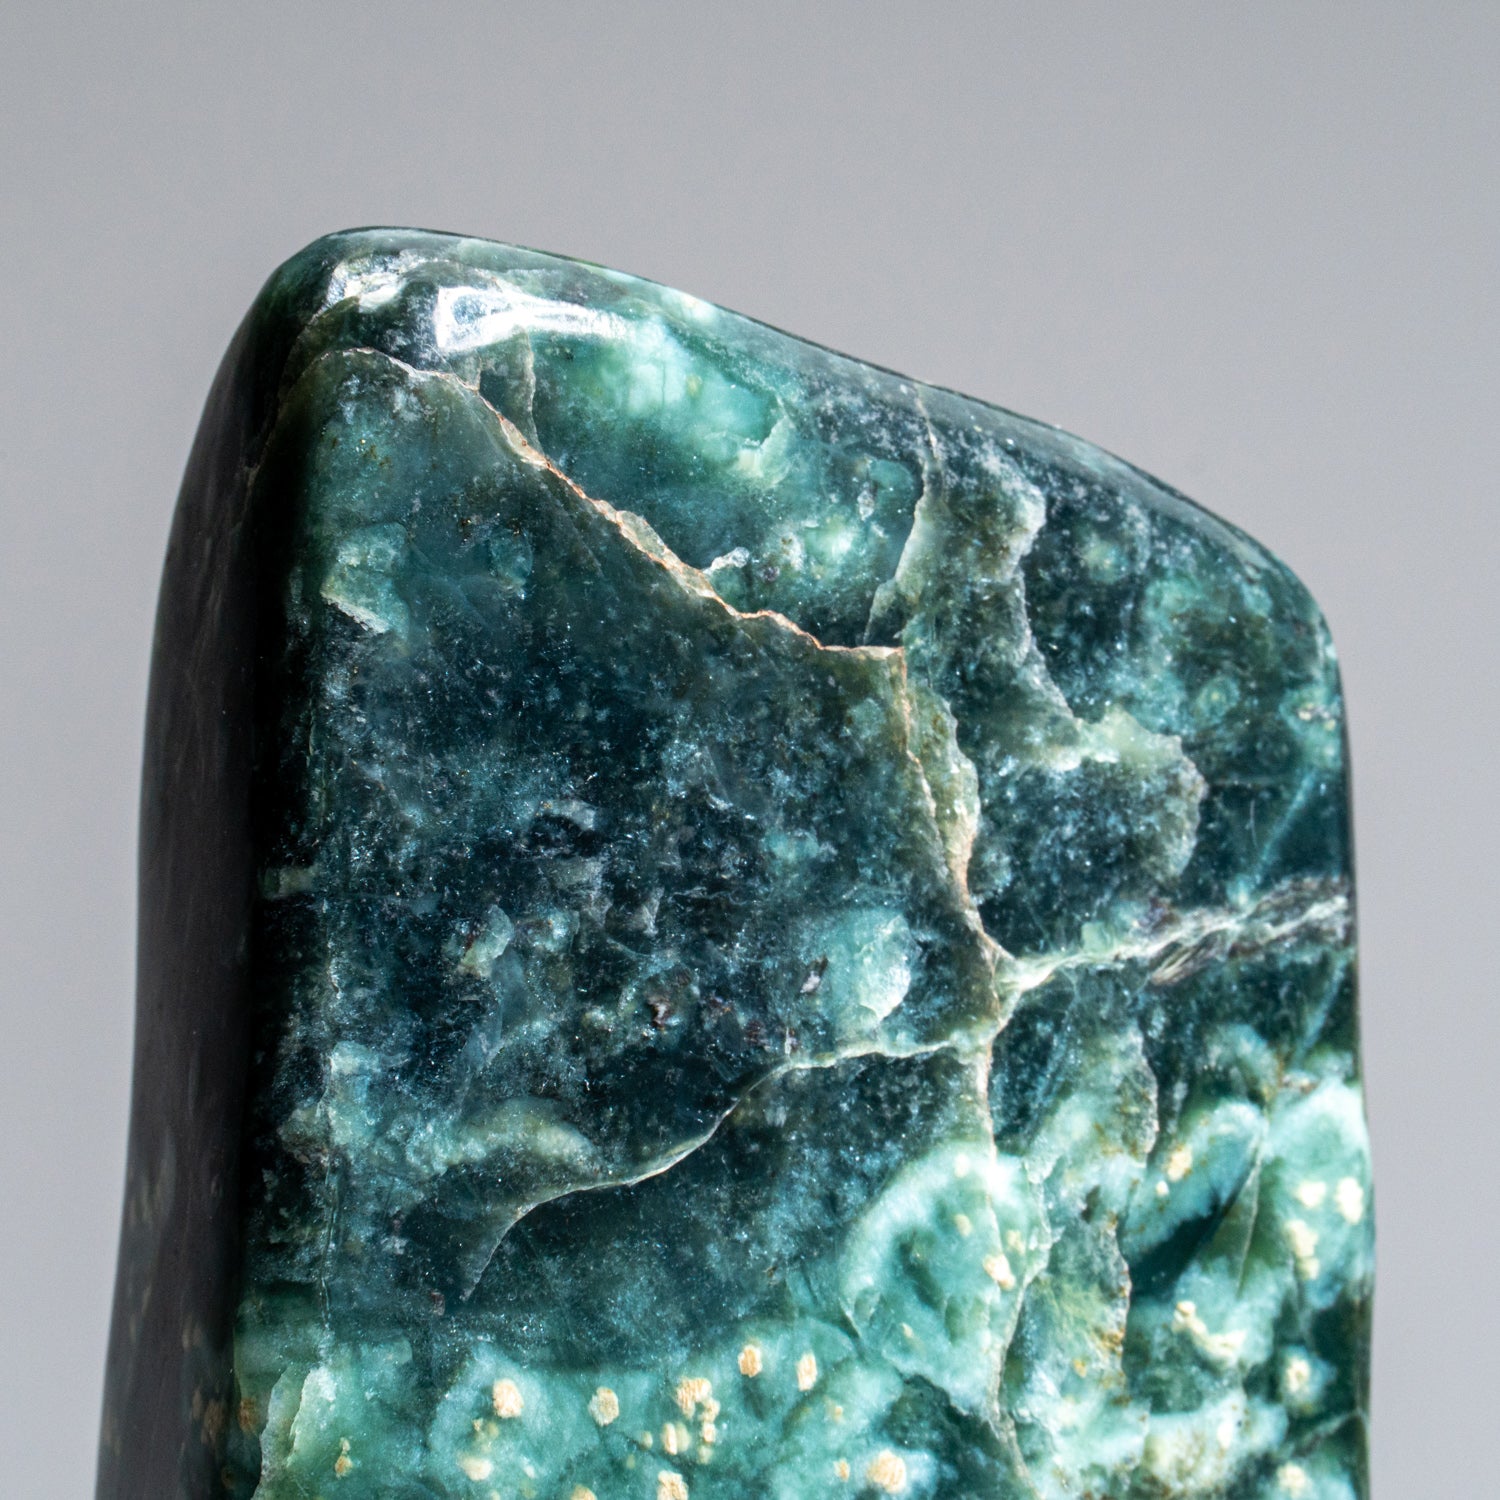 Polished Nephrite Jade Freeform from Pakistan (1.7 lbs)